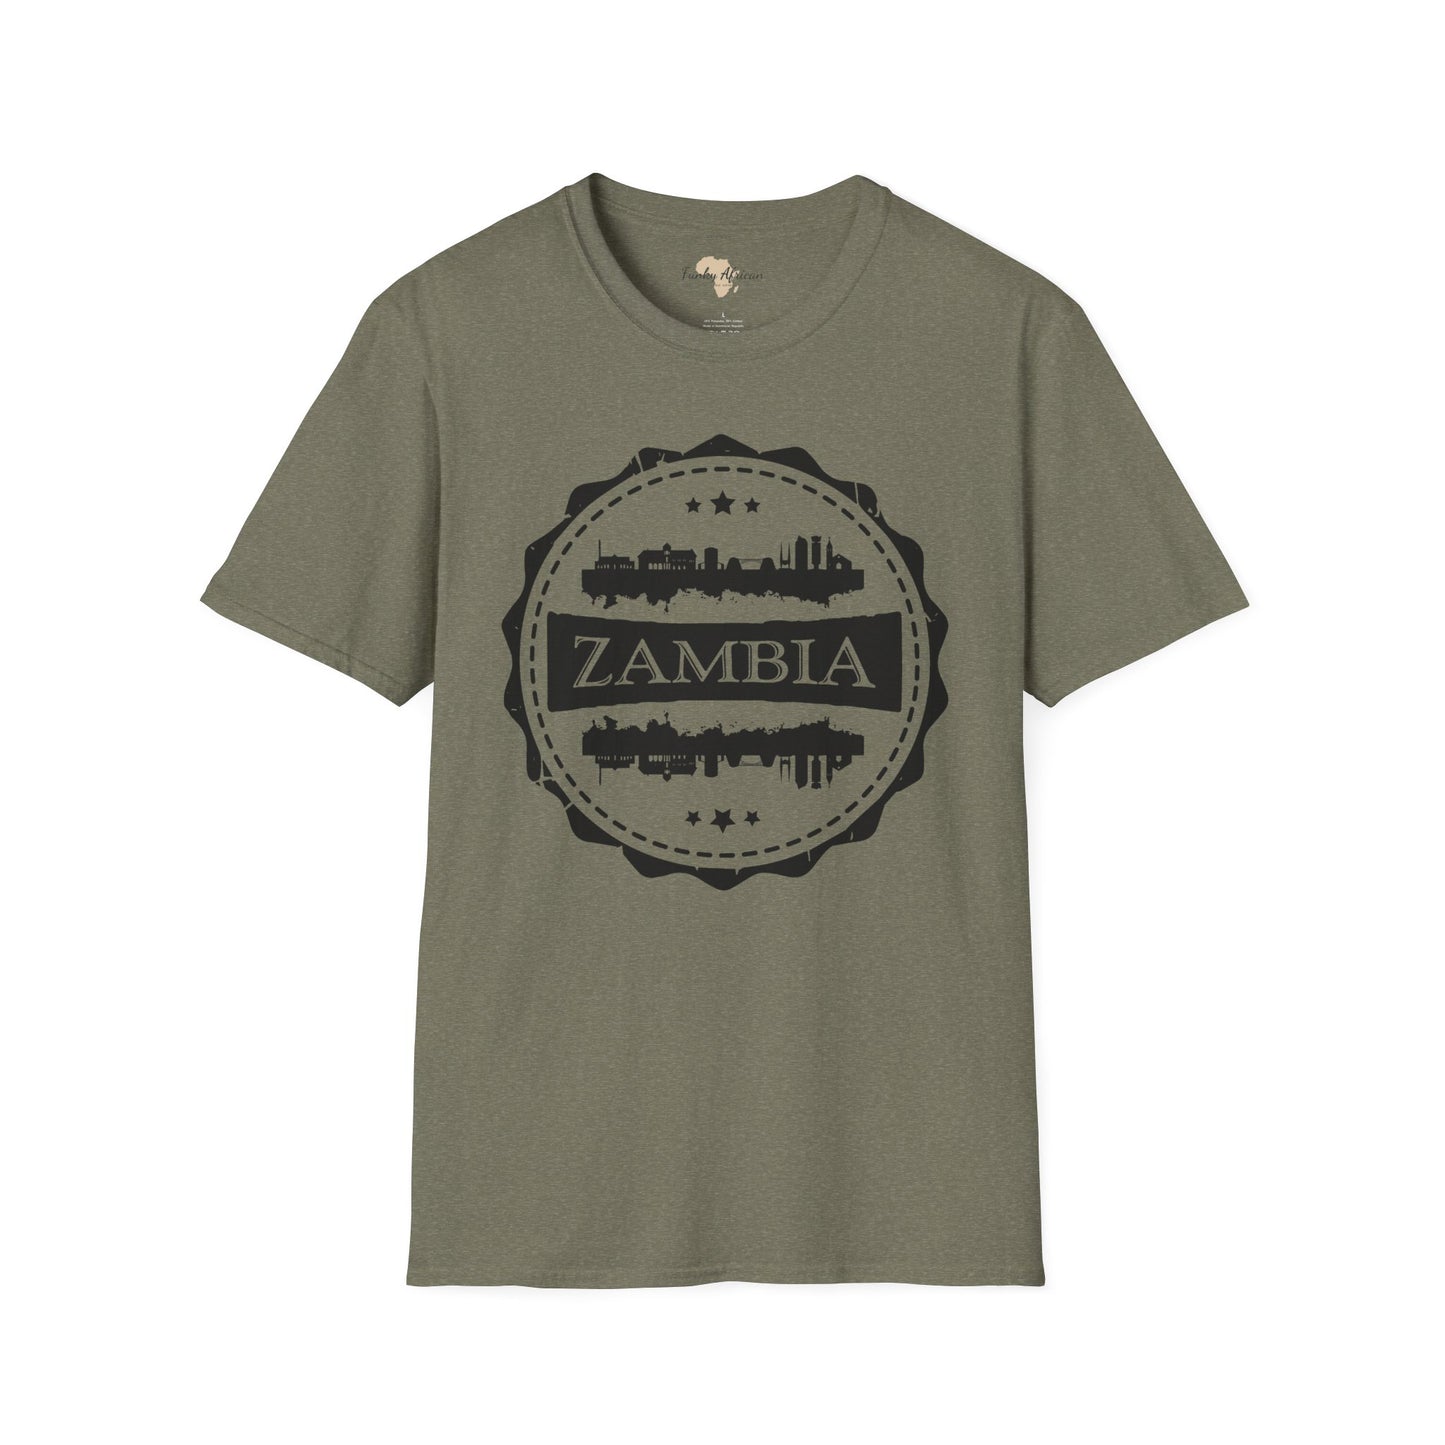 Zambia Stamp unisex tee